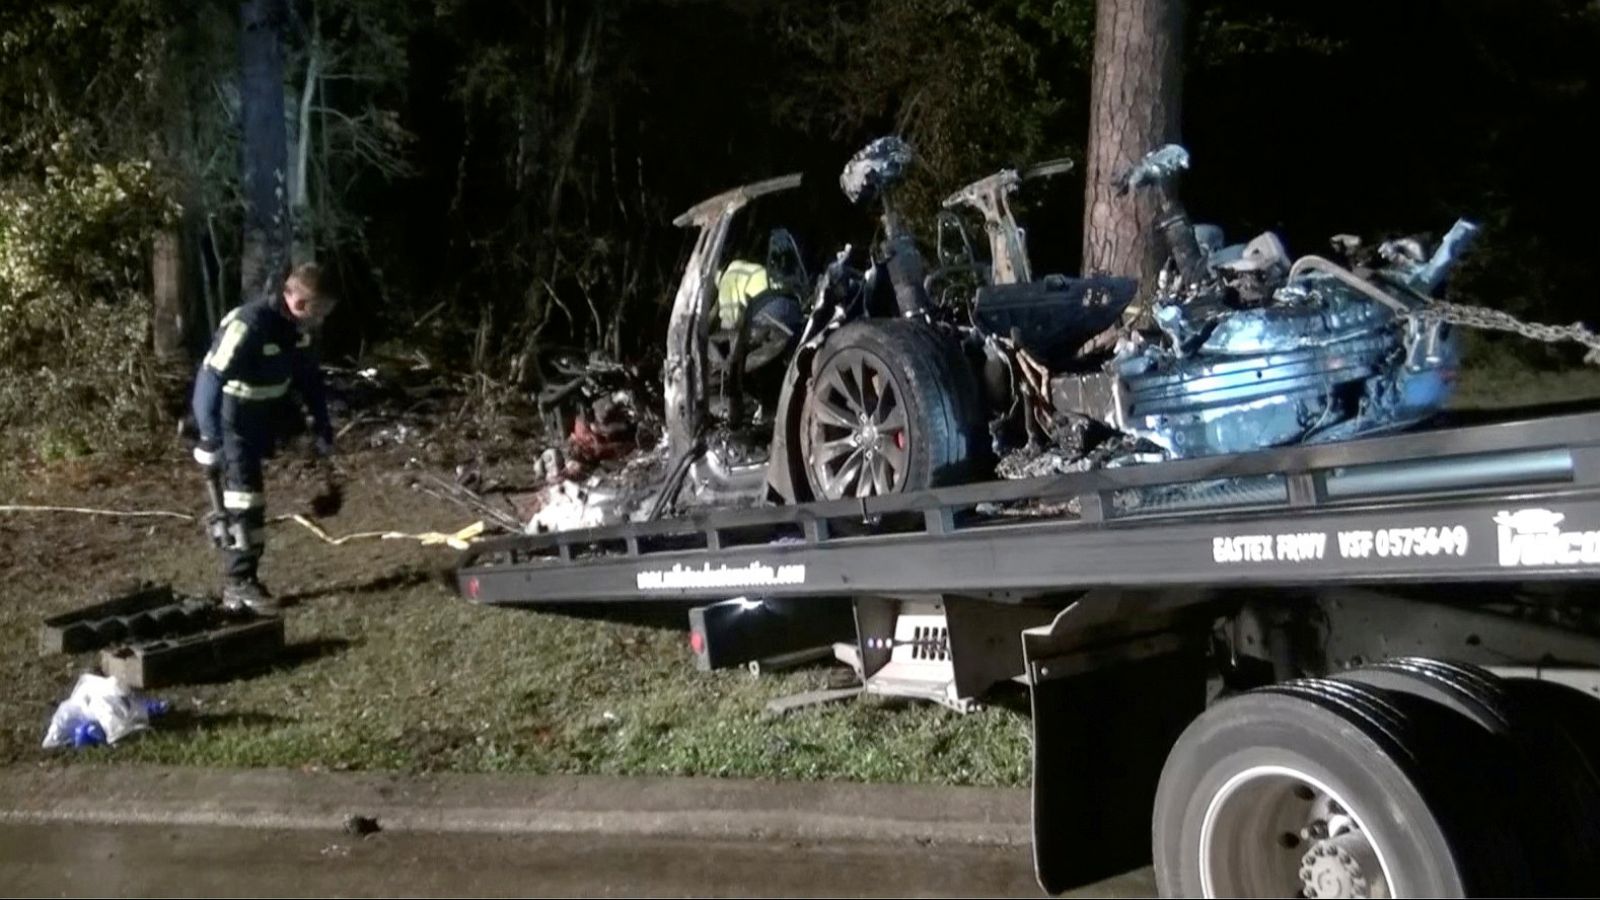 Driver was behind wheel at time of Texas Tesla crash, NTSB says